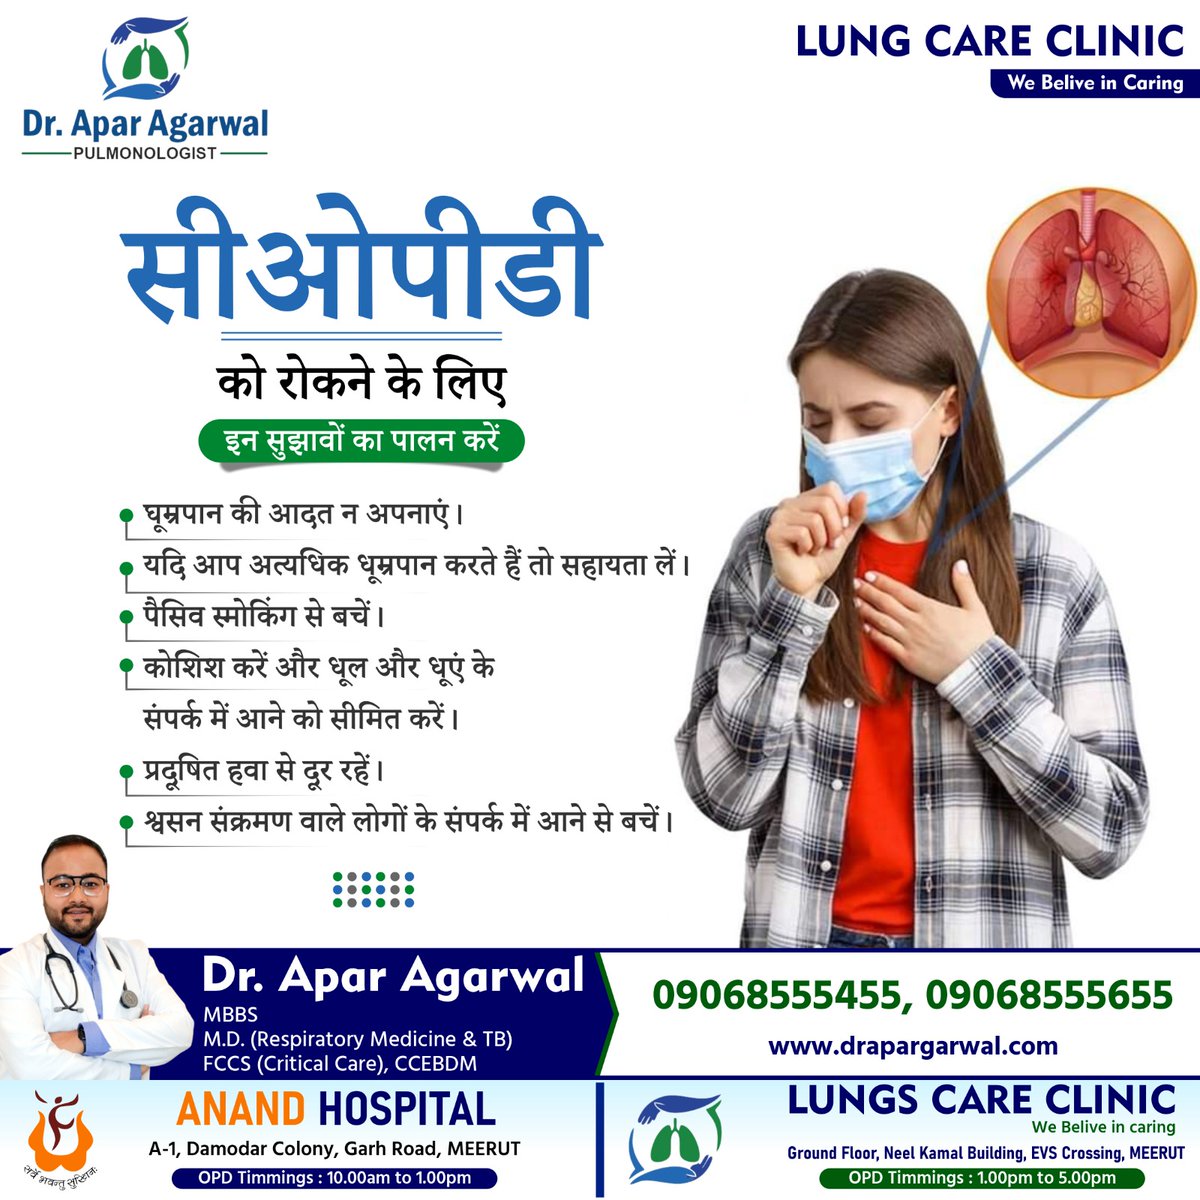 📷सीओपीडी को रोकने के लिए इन सुझावों का पालन करें📷 •visit us for more information : draparagarwal.com #DrAparAgarwal #allergicasthma #allergicrinitis #lung #health #medical #medicine #lungcancer #asthma #lungdisease #physicianlife #doctor #copd #doctors